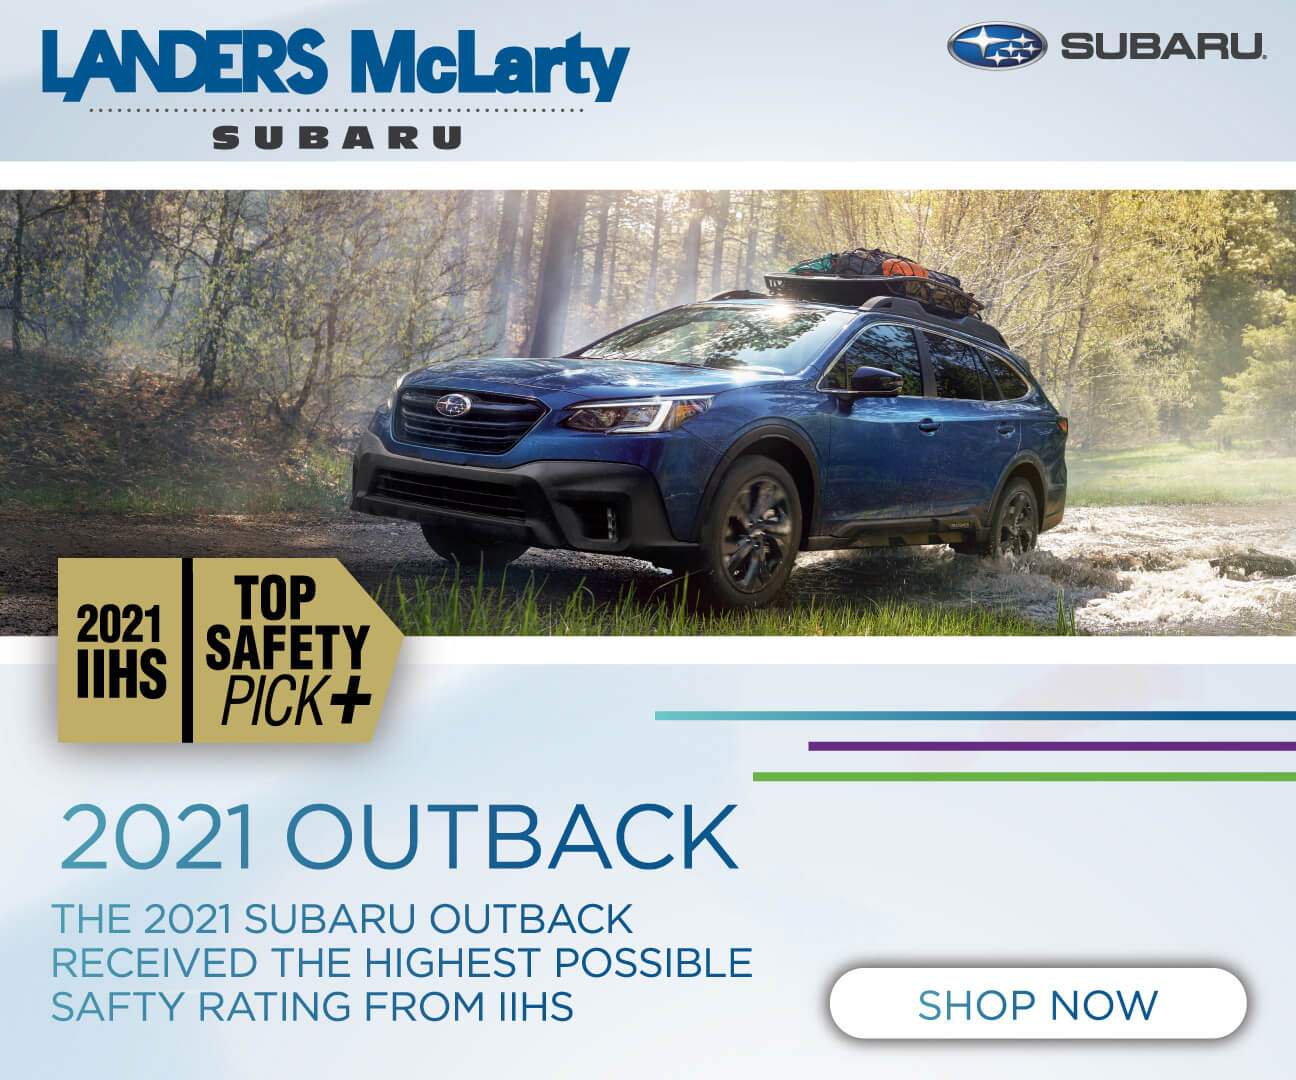 Landers McLarty Subaru - Digital Display Ad